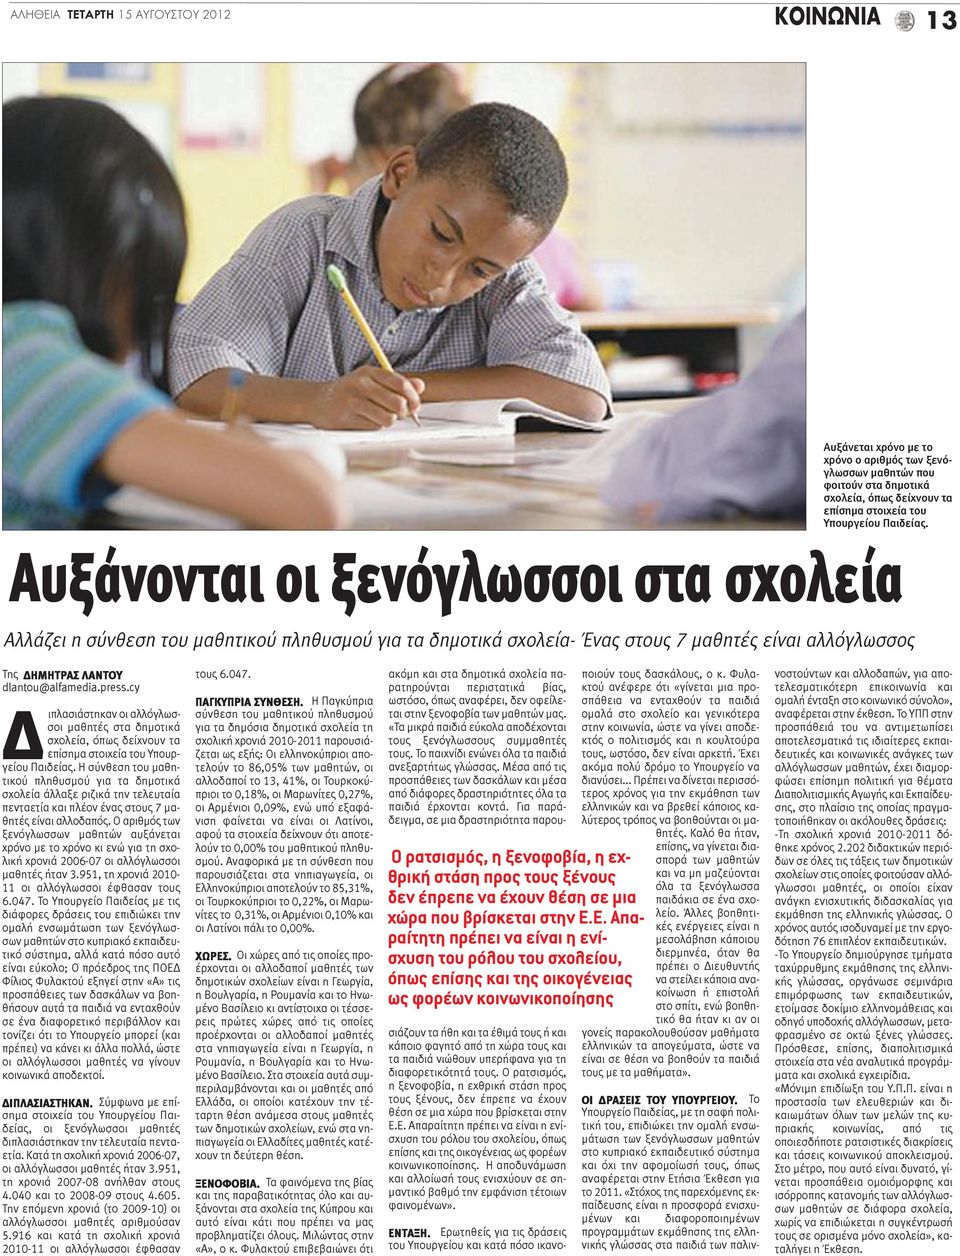 cy Διπλασιάστηκαν οι αλλόγλωσσοι μαθητές στα δημοτικά σχολεία, όπως δείχνουν τα επίσημα στοιχεία του Υπουργείου Παιδείας.